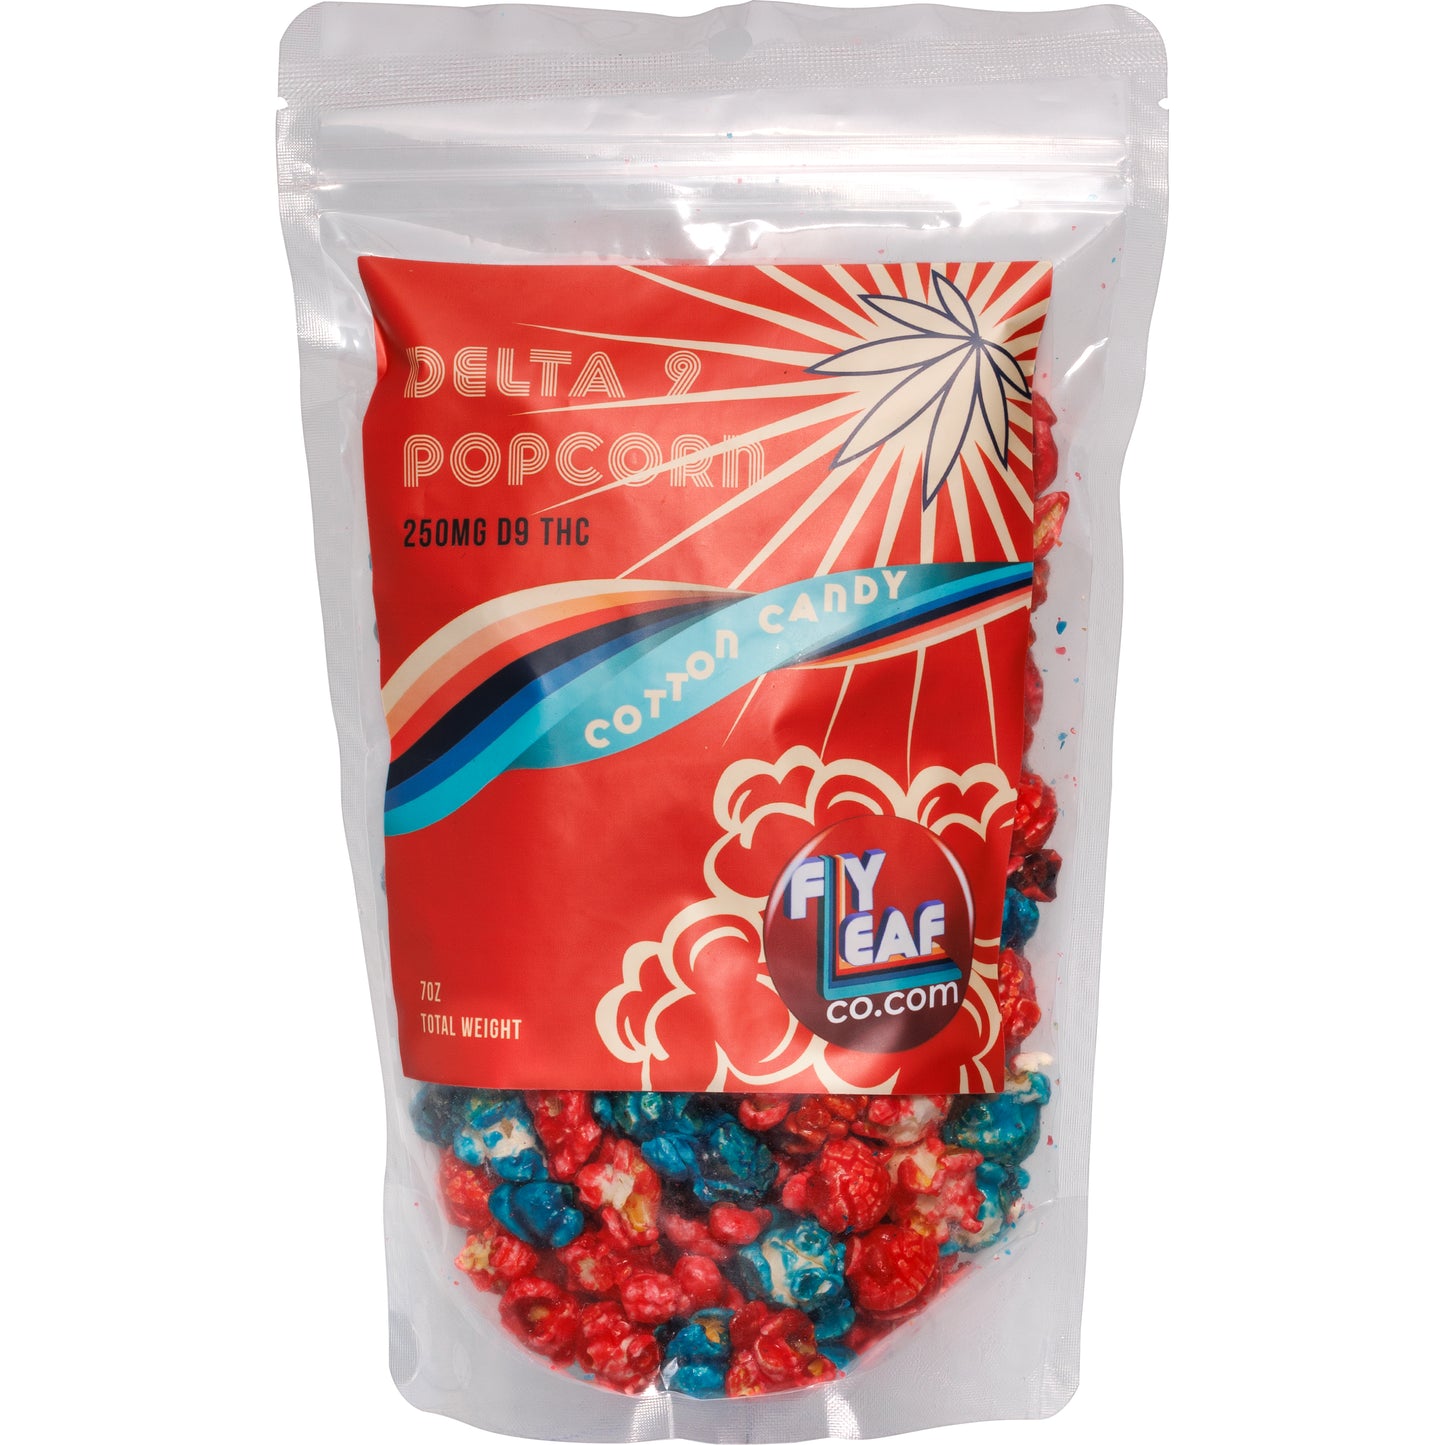 Cotton Candy Popcorn - 250MG 7oz bag